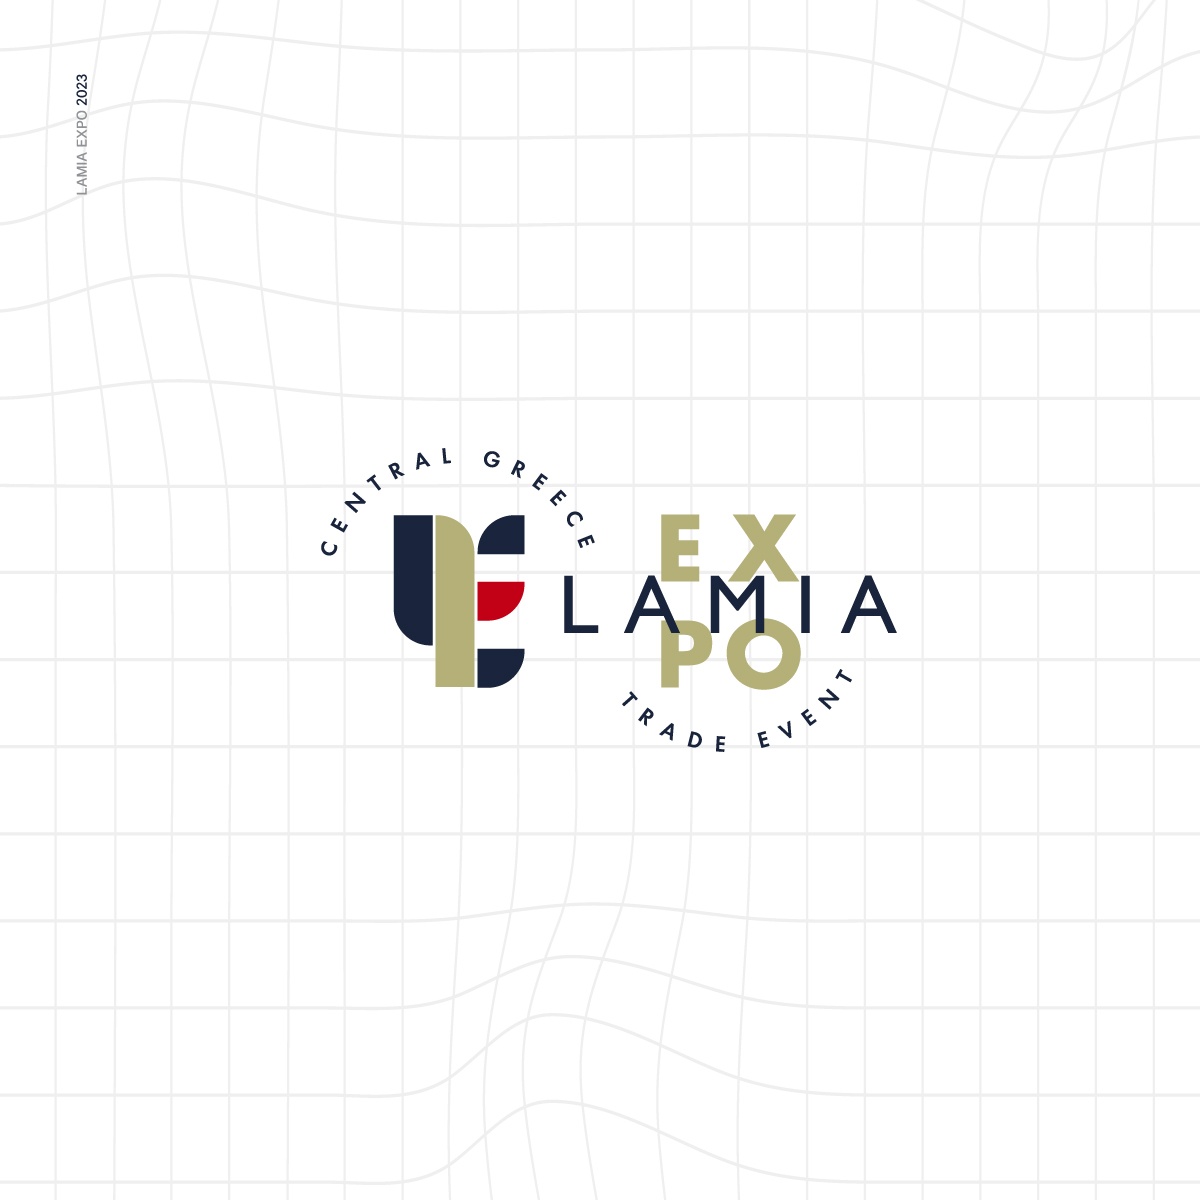 Lamia Expo | Corporate ID